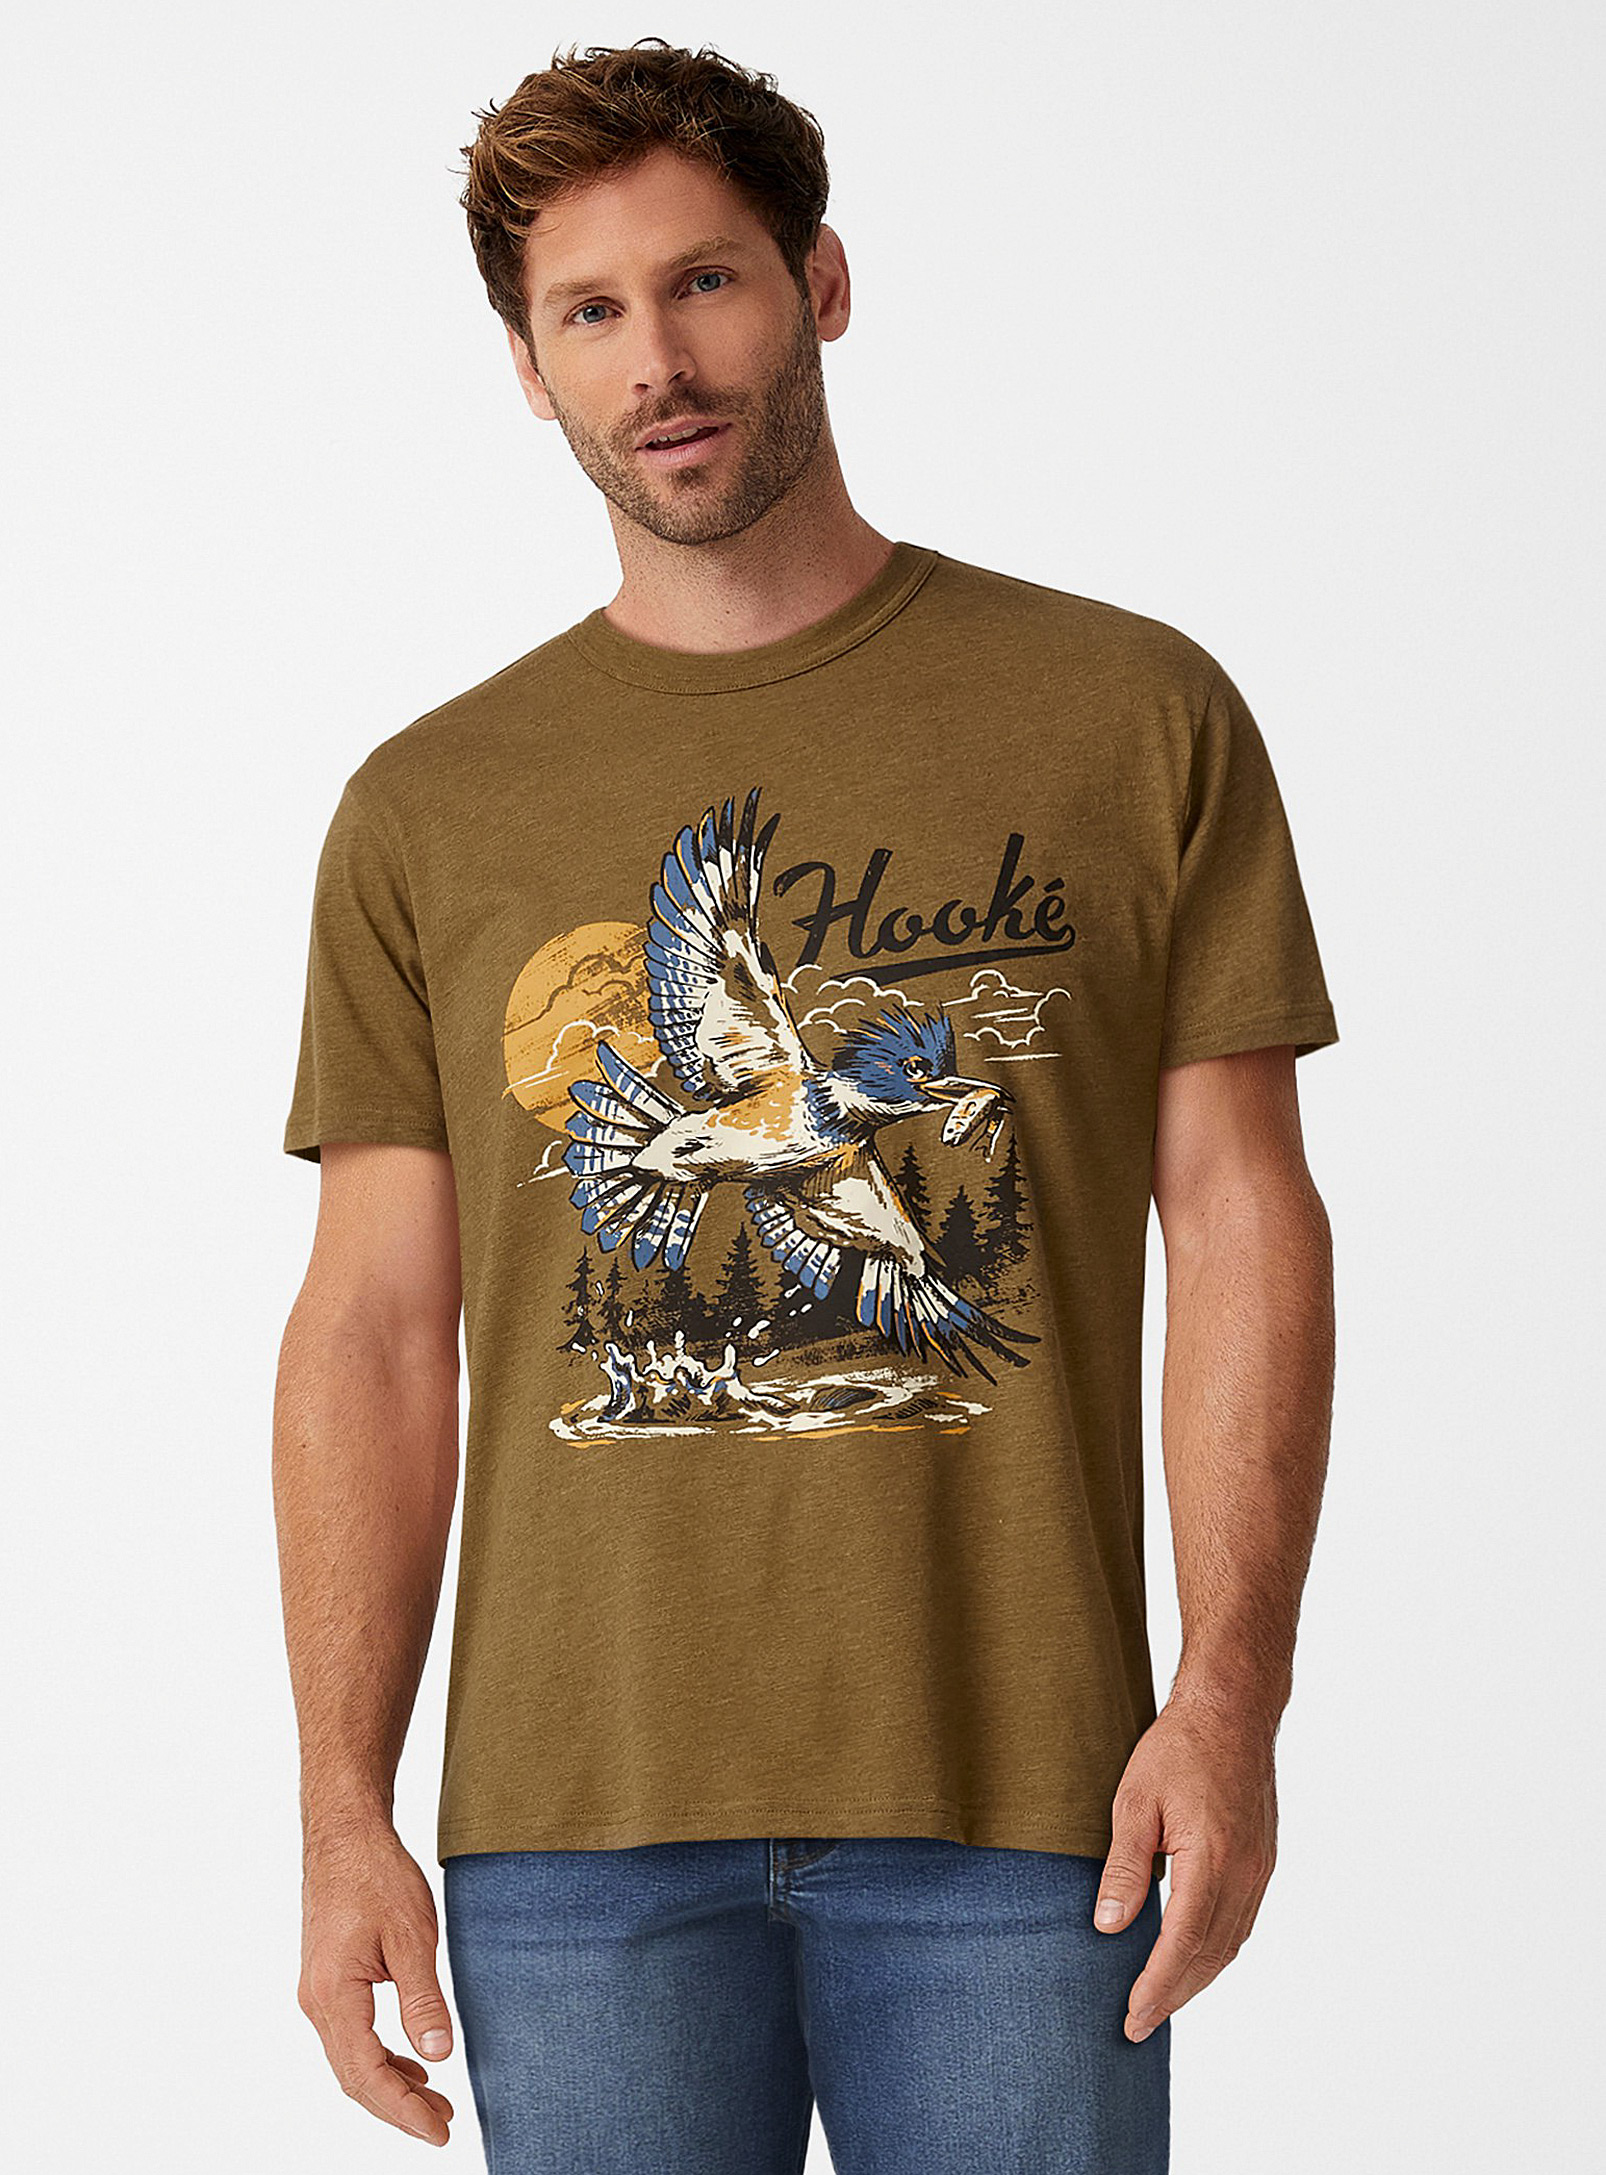 Hooké - Le t-shirt martin-pêcheur